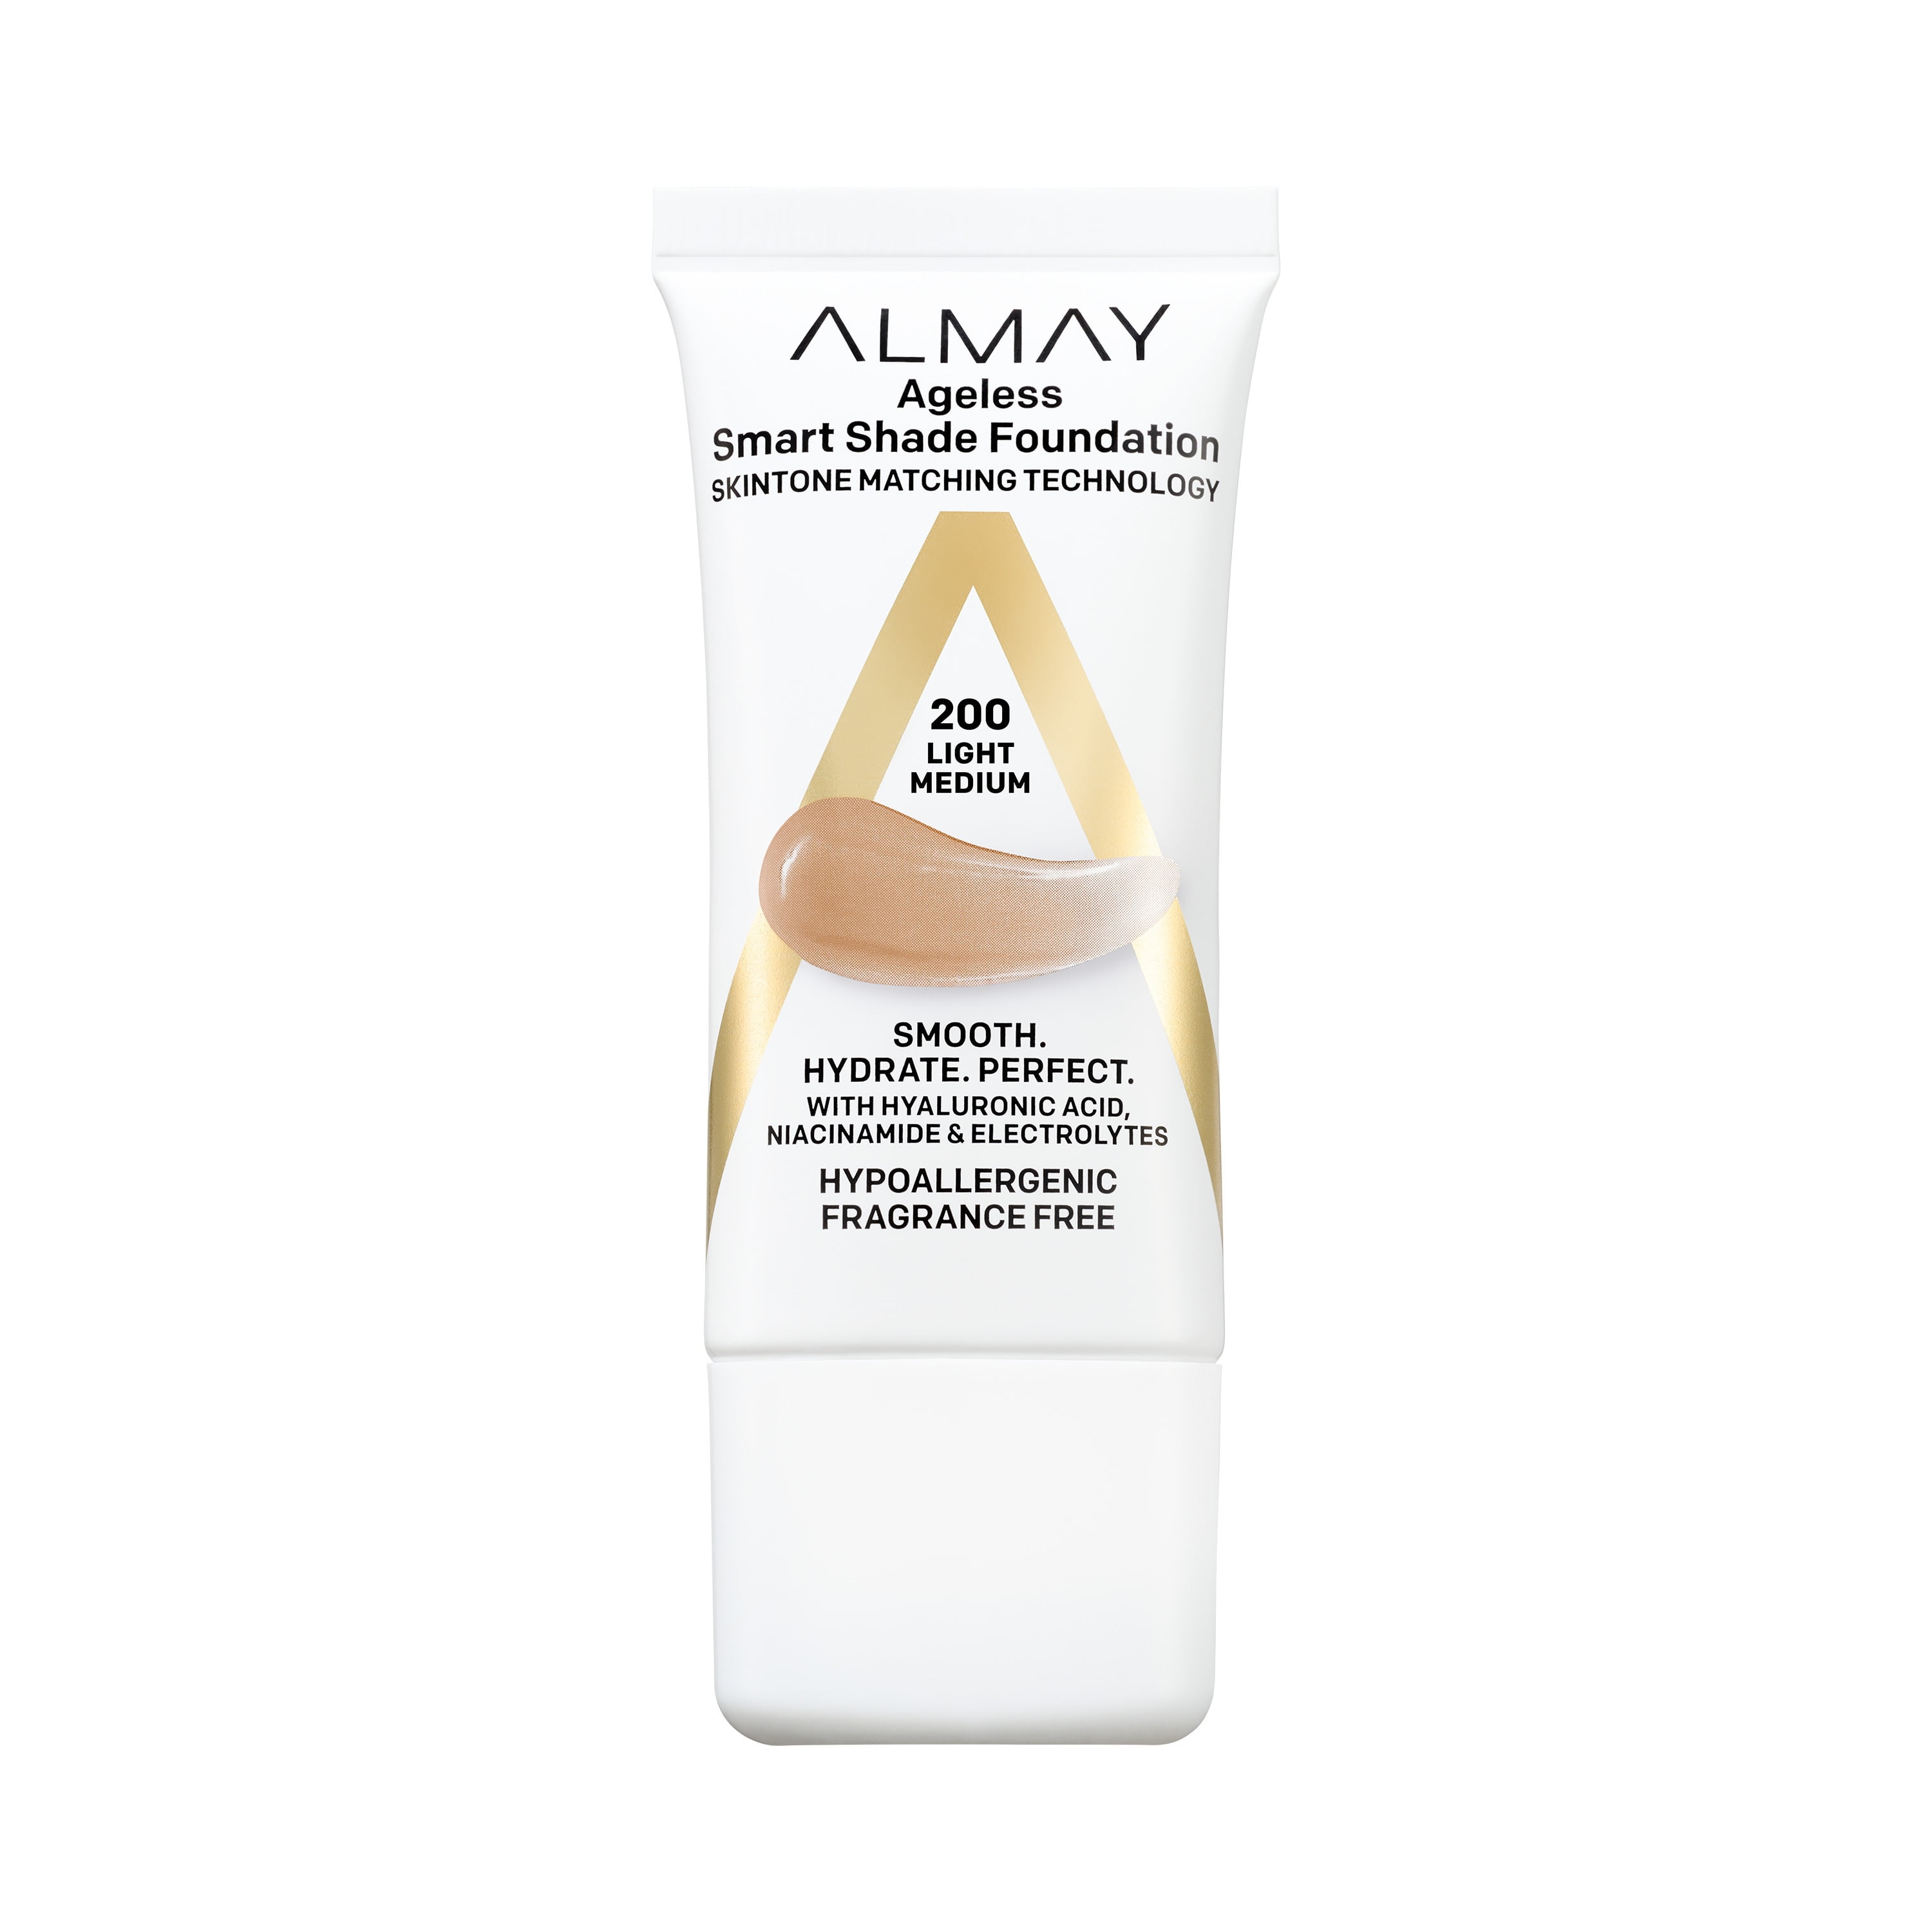 Almay Anti-Aging Foundation by Almay, Smart Shade Face Makeup with Hyaluronic Acid, Niacinamide, Vitamin C & E, Hypoallergenic, Fragrance Free, 200 Light Medium, 1 Fl Oz, 200 Light Medium, 1 fl oz.